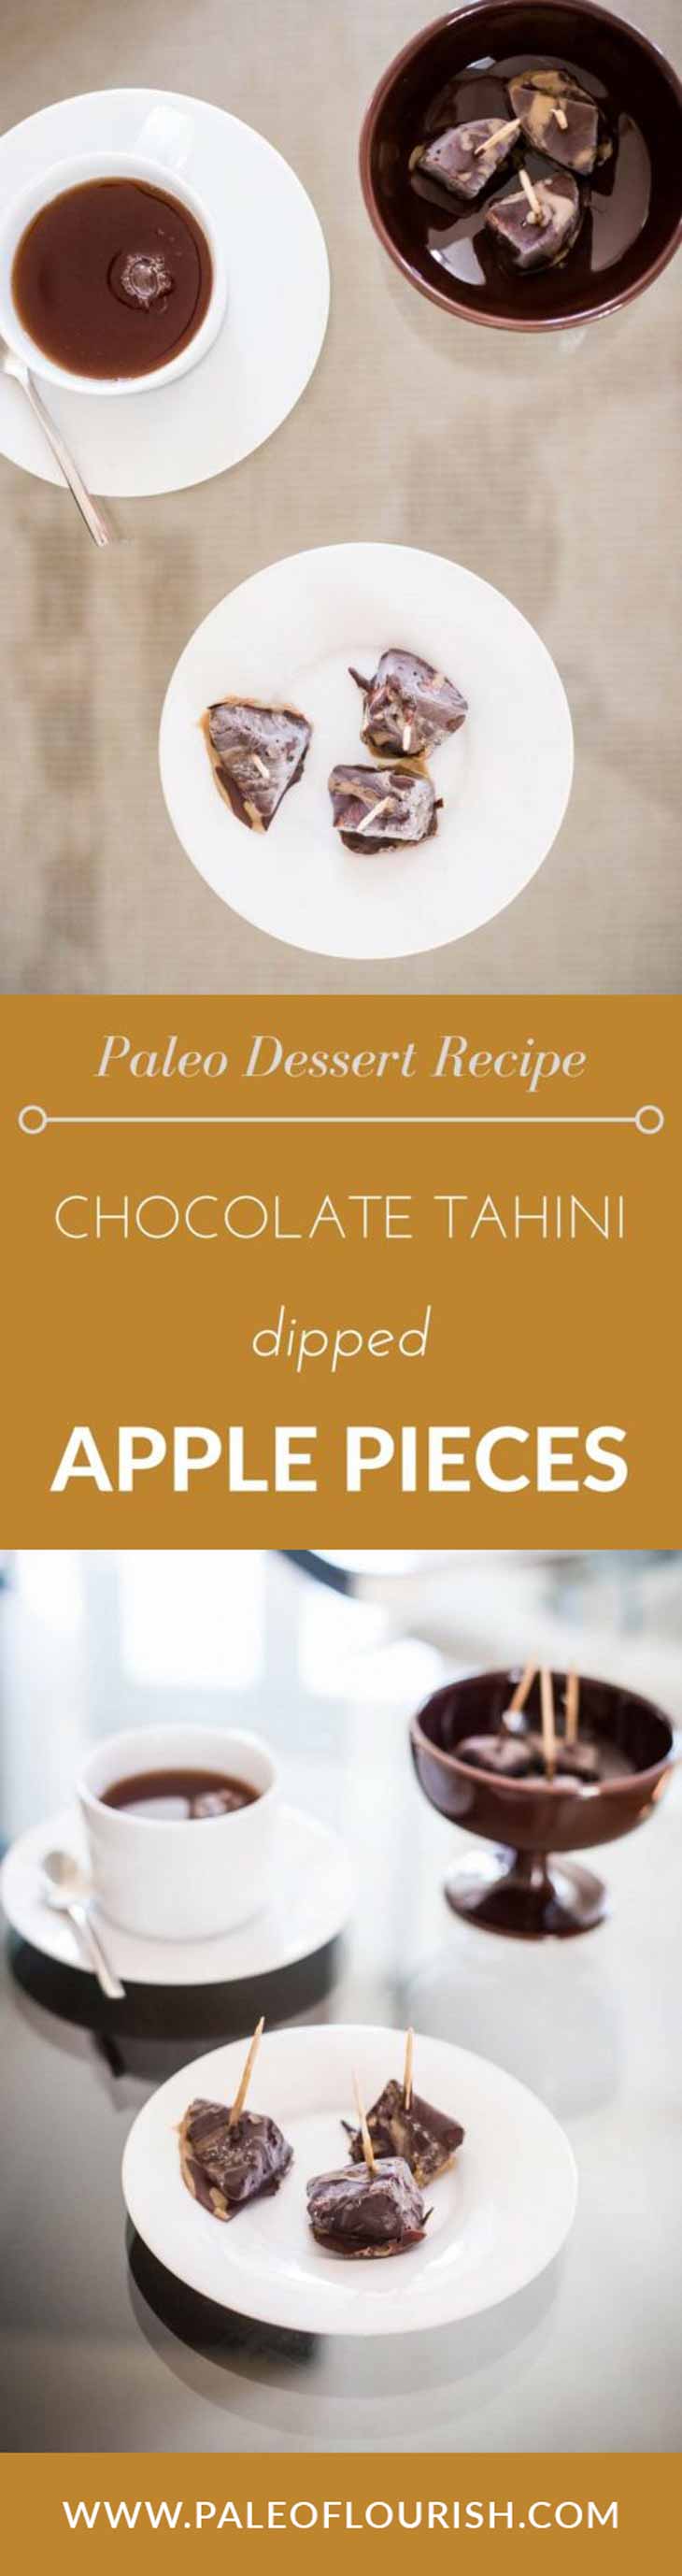 Paleo Chocolate Tahini Dipped Apple Pieces #paleo #dessert #recipes -  https://paleoflourish.com/paleo-chocolate-tahini-dipped-apple-pieces